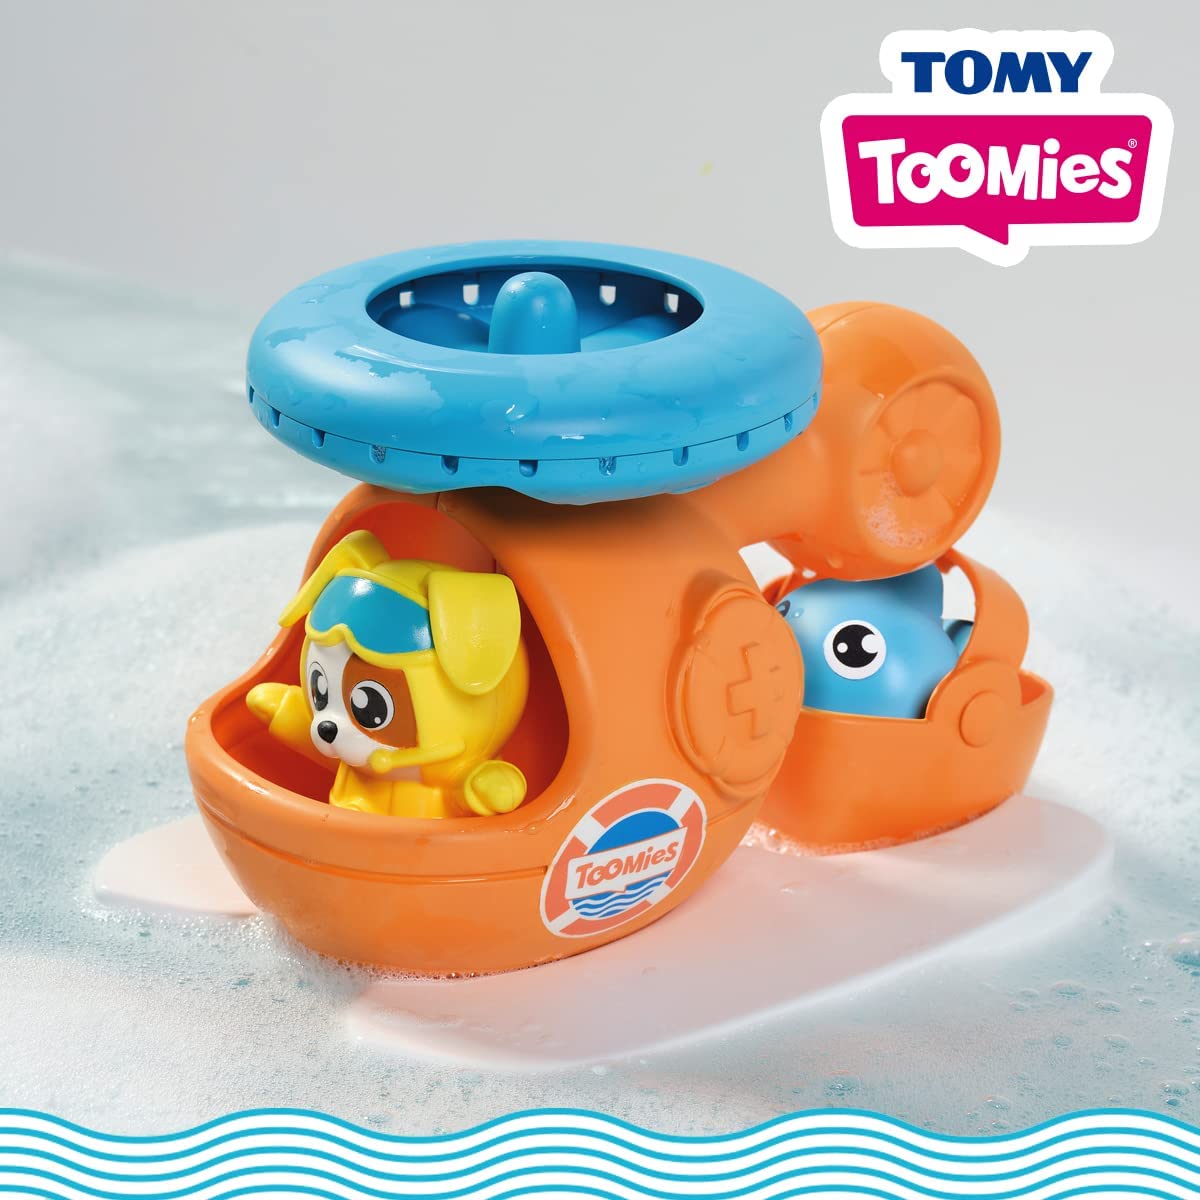 Tomy Toomies Splash & Rescue Helicopter